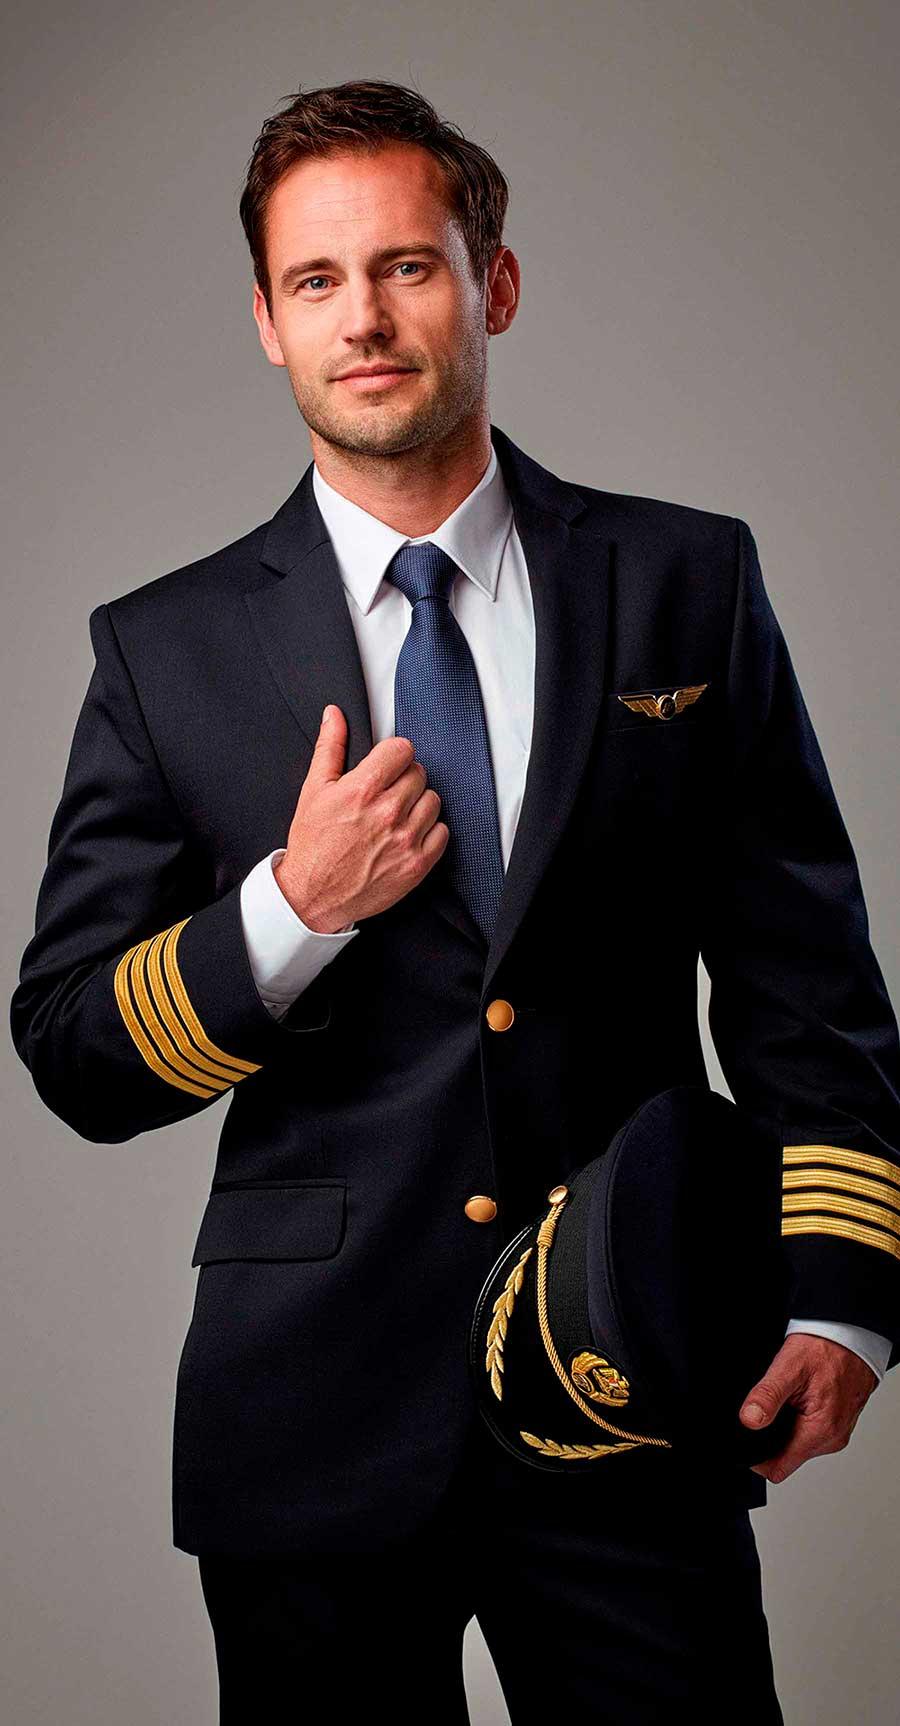 Pilot uniform for Icelandair